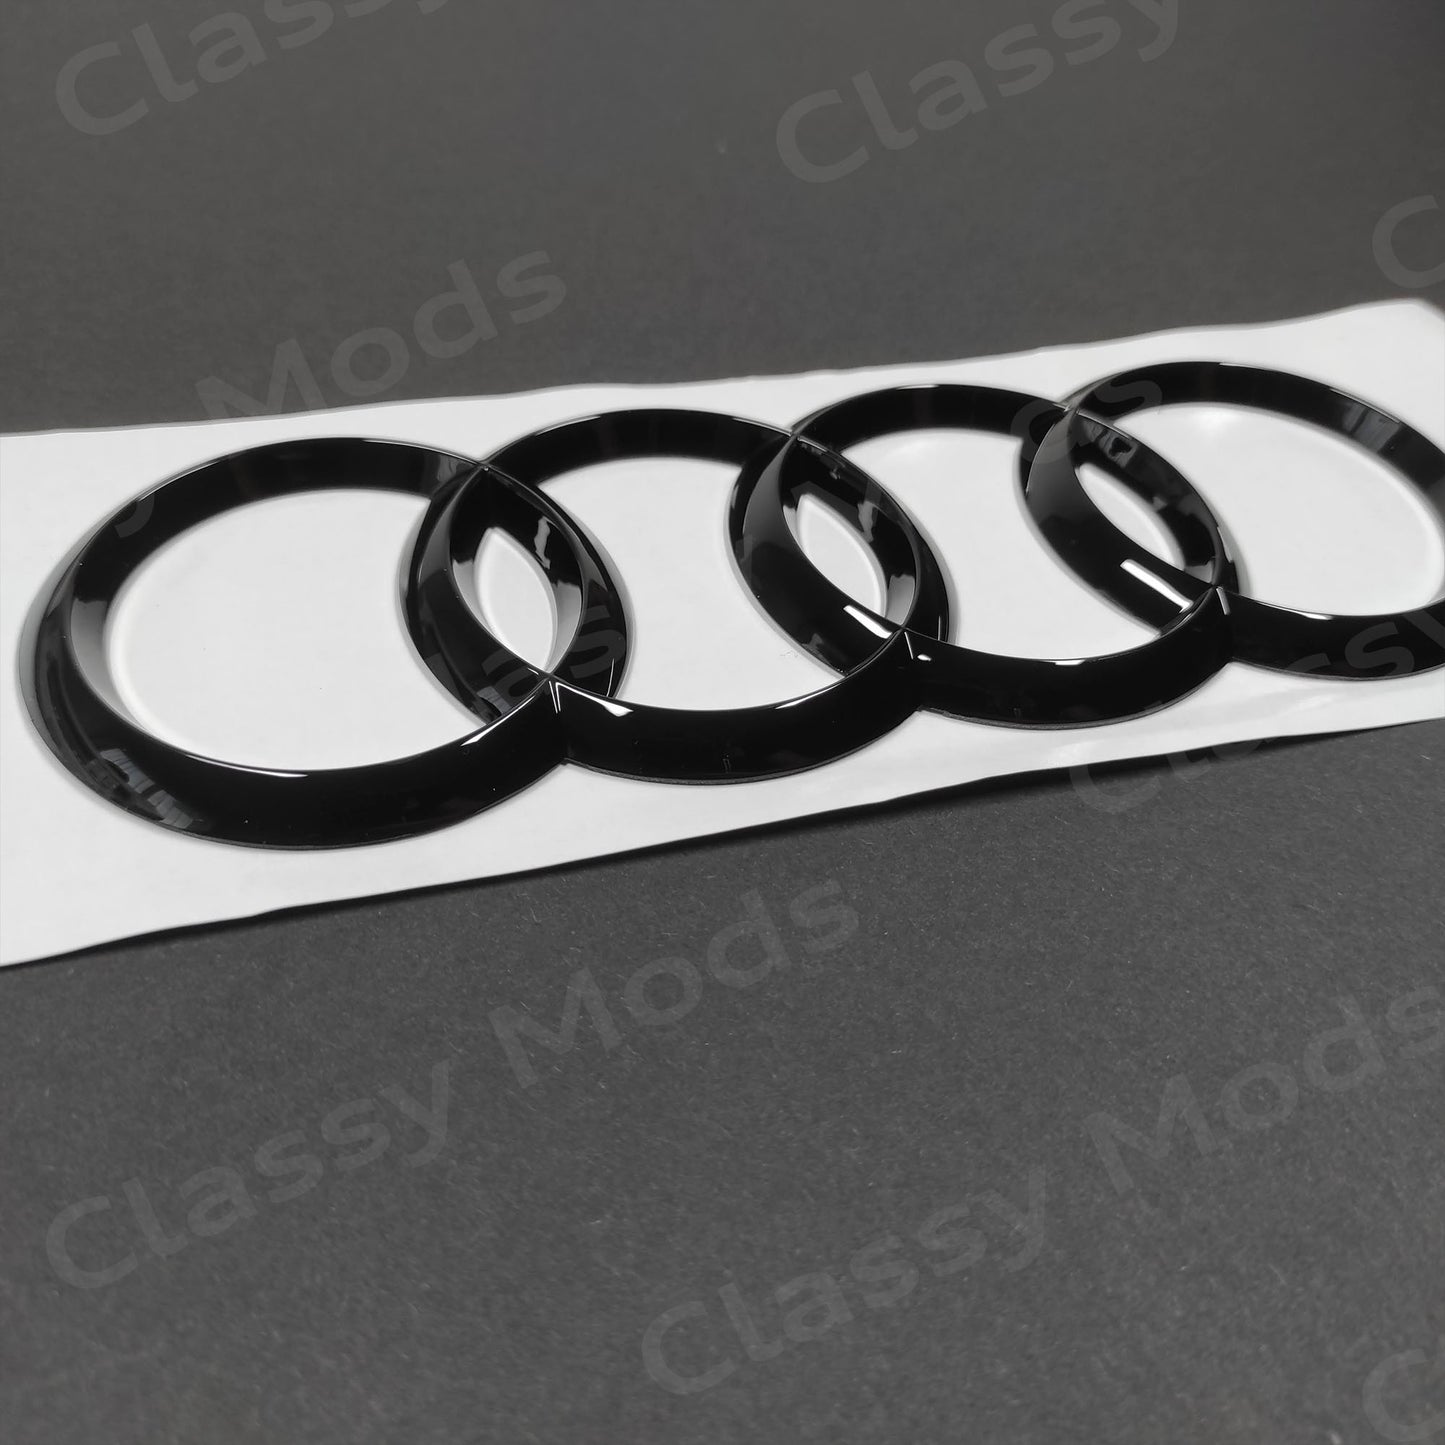 Audi Tailgate Rings Rear Emblem Badge Gloss Black